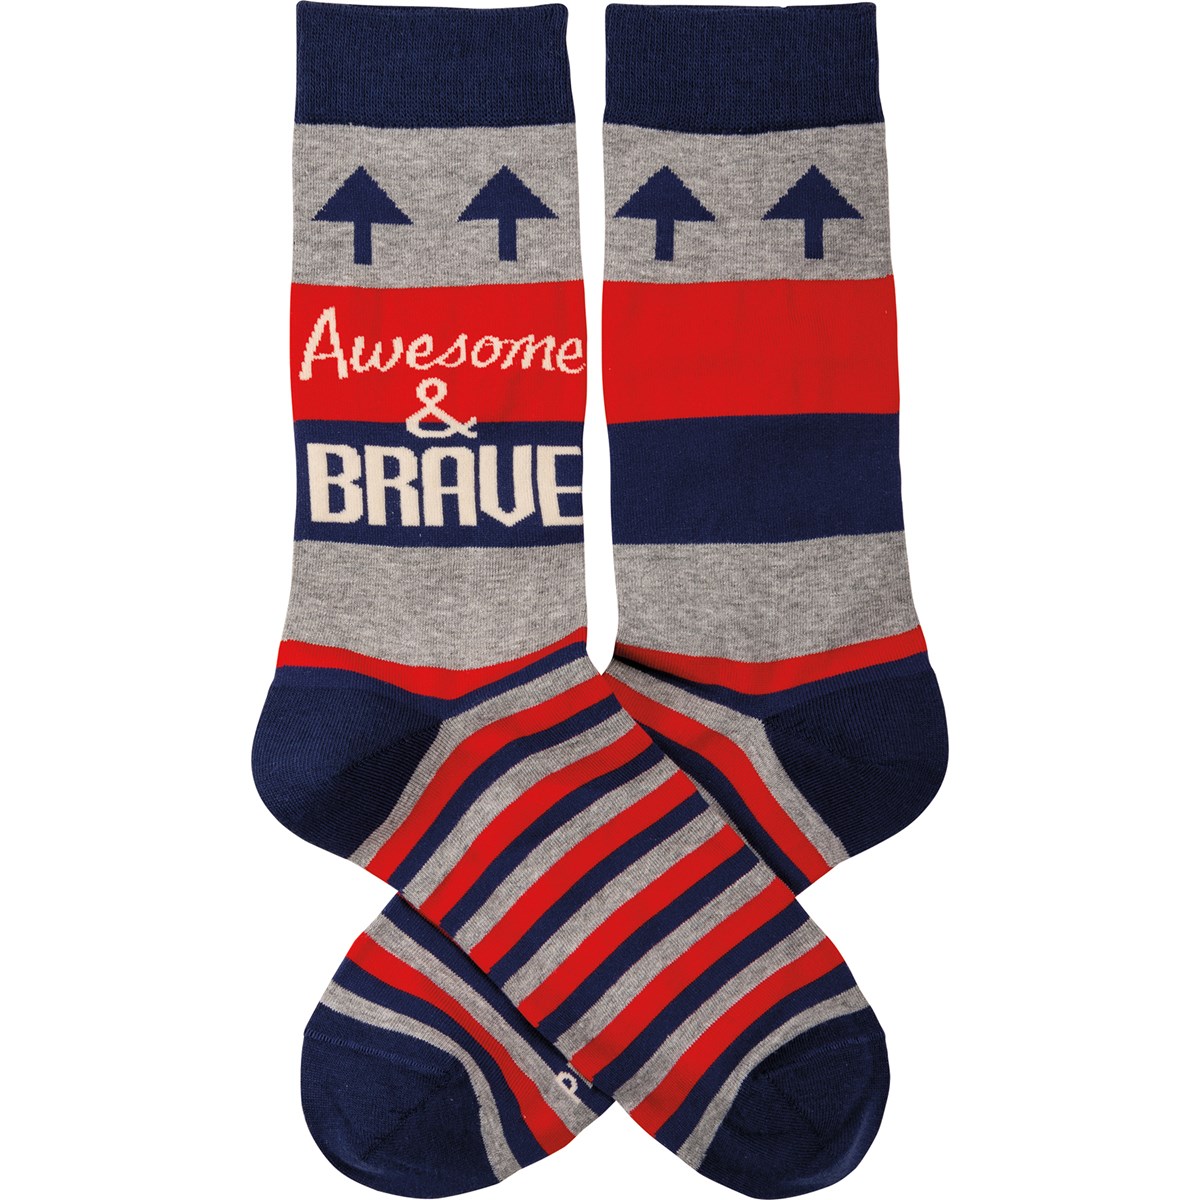 Awesome & Brave Socks - Cotton, Nylon, Spandex